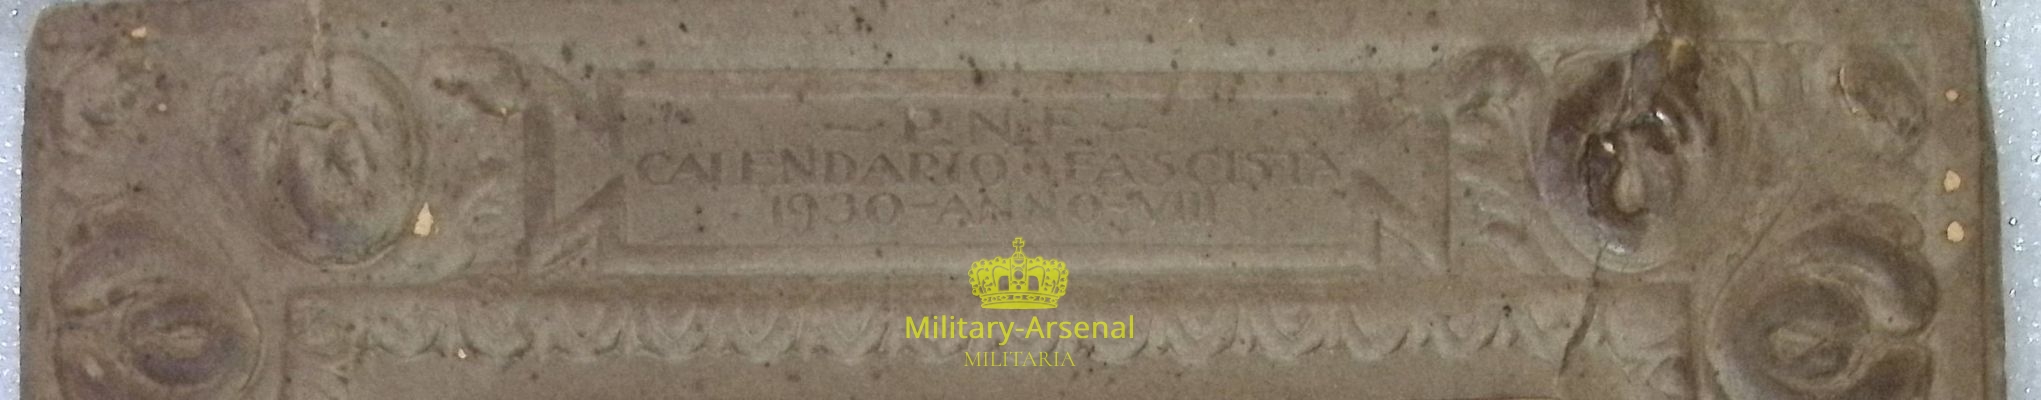 Calendario P.N.F.1930  | Military Arsenal